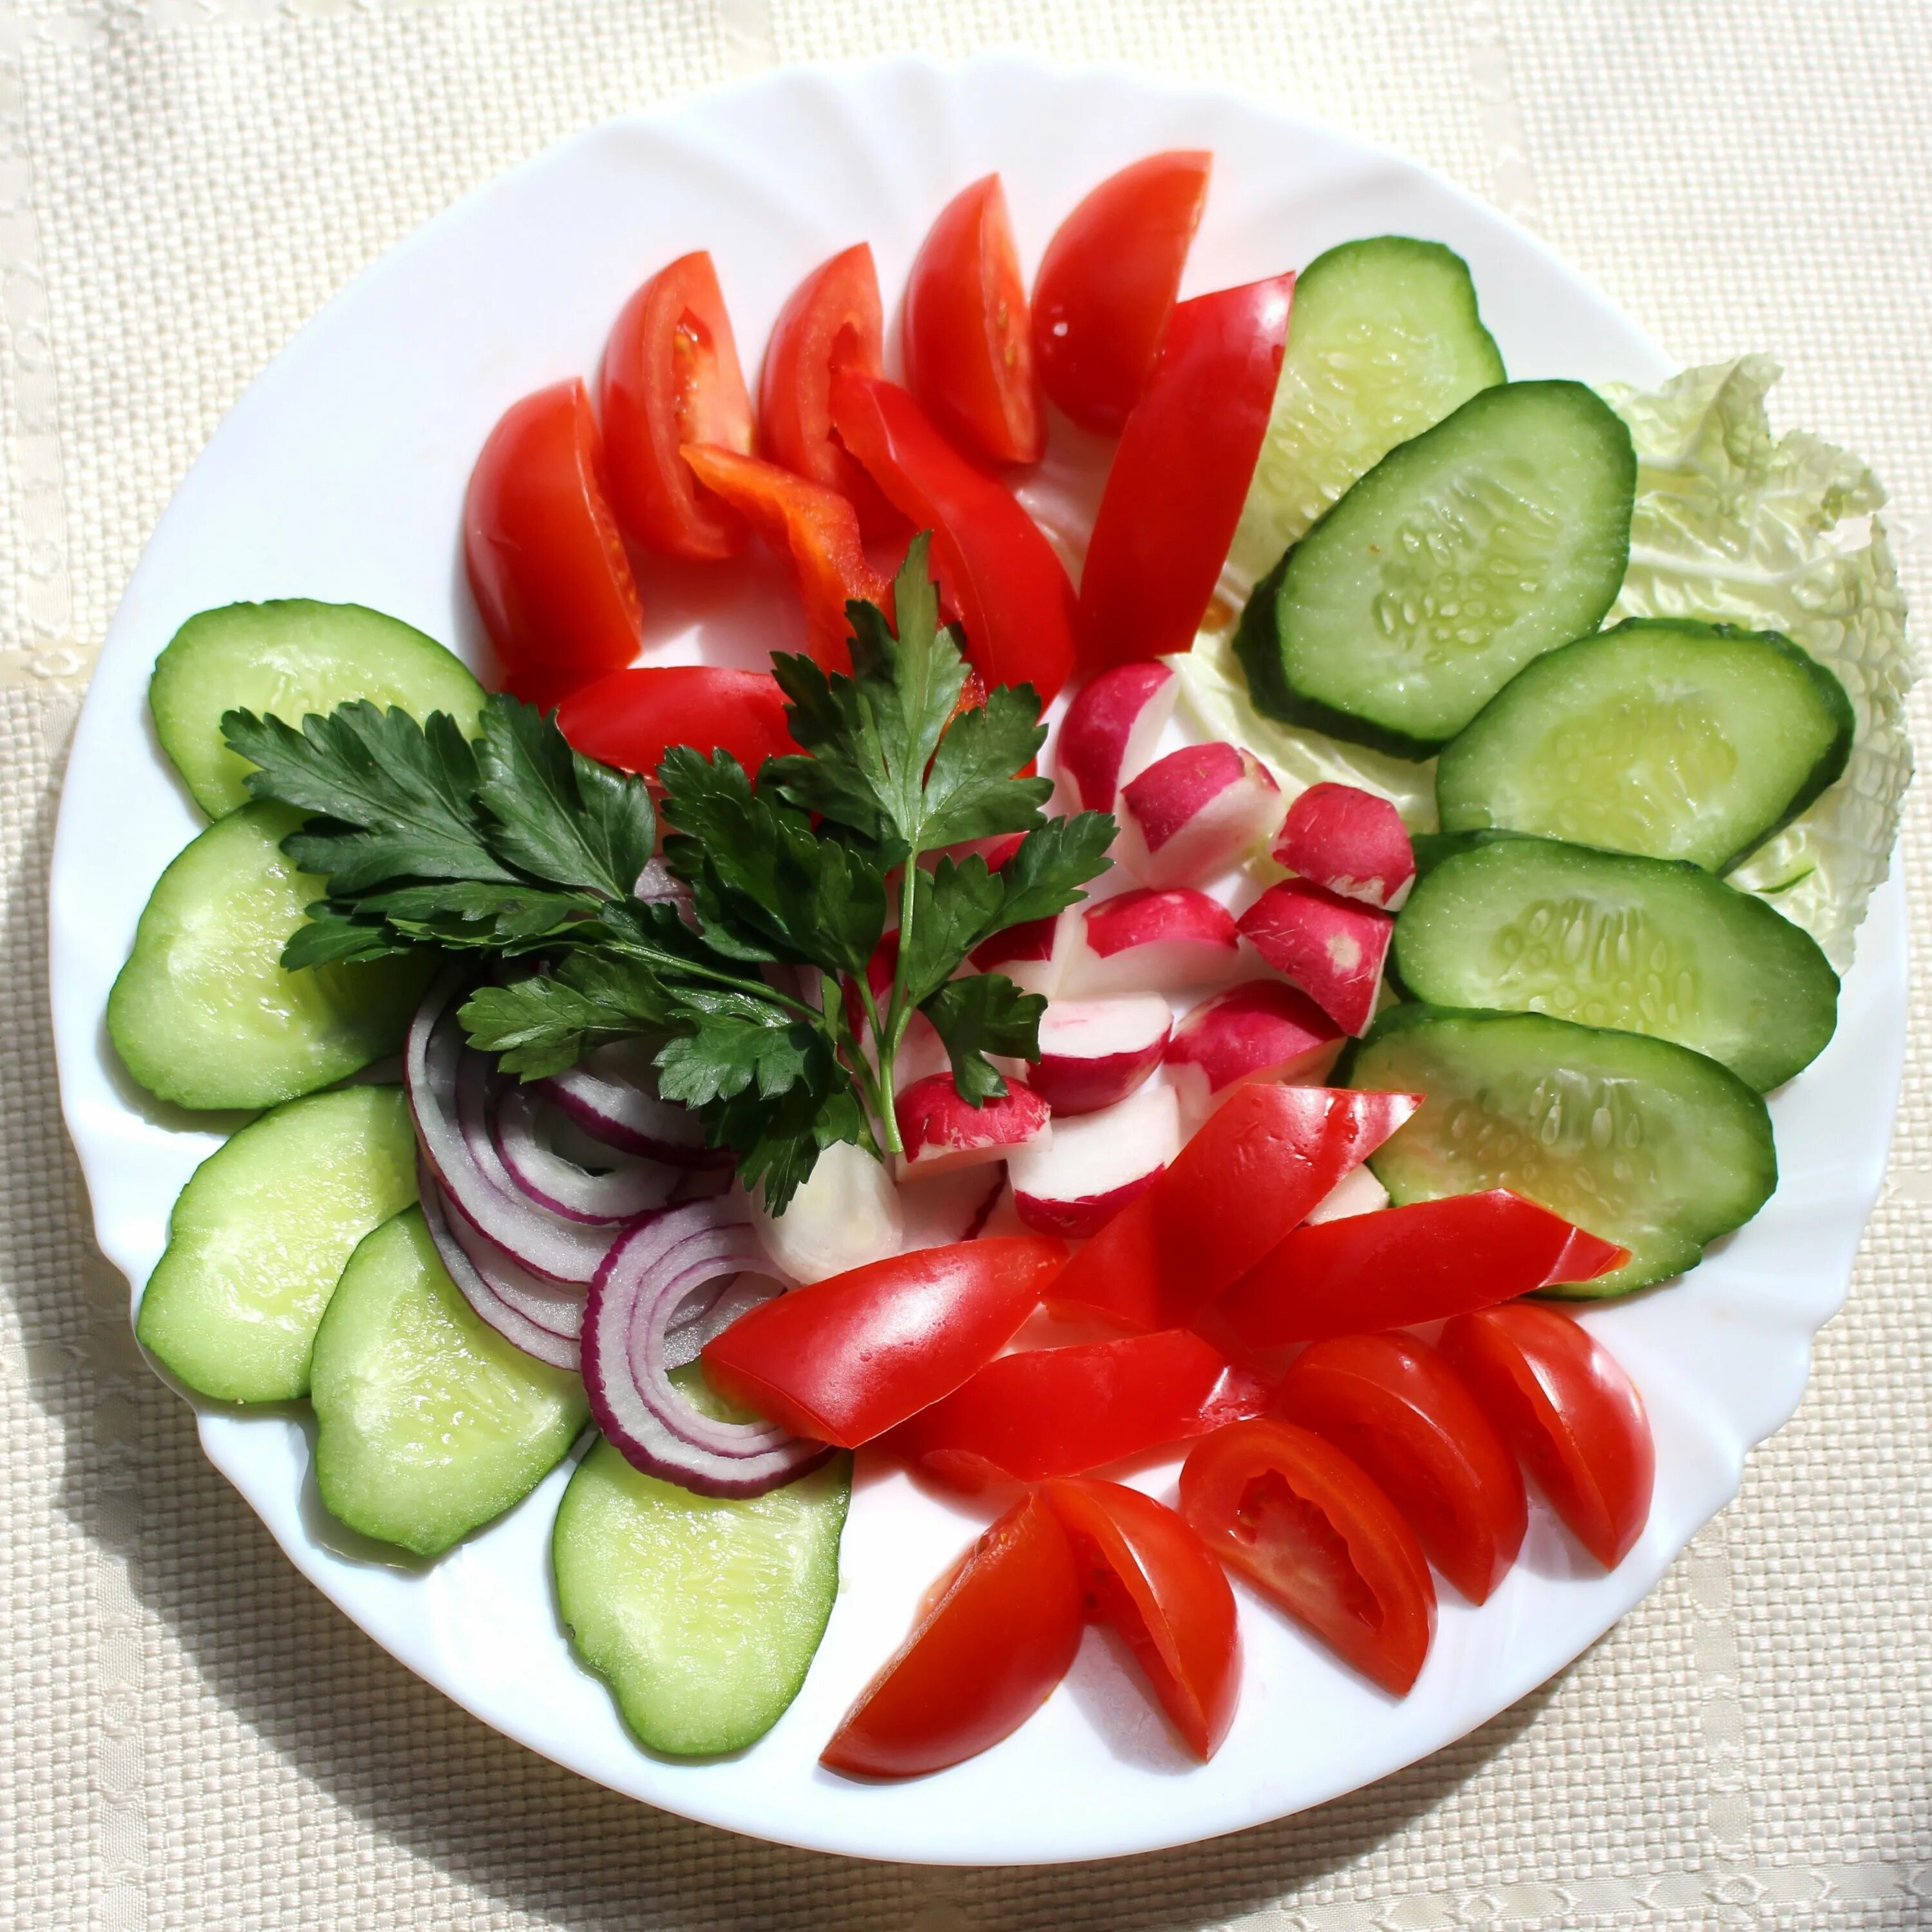 Нарезка огурцов на стол. Овощная нарезка. Красивая овощная нарезка. Свежие овощи на тарелке. Салат овощная нарезка.